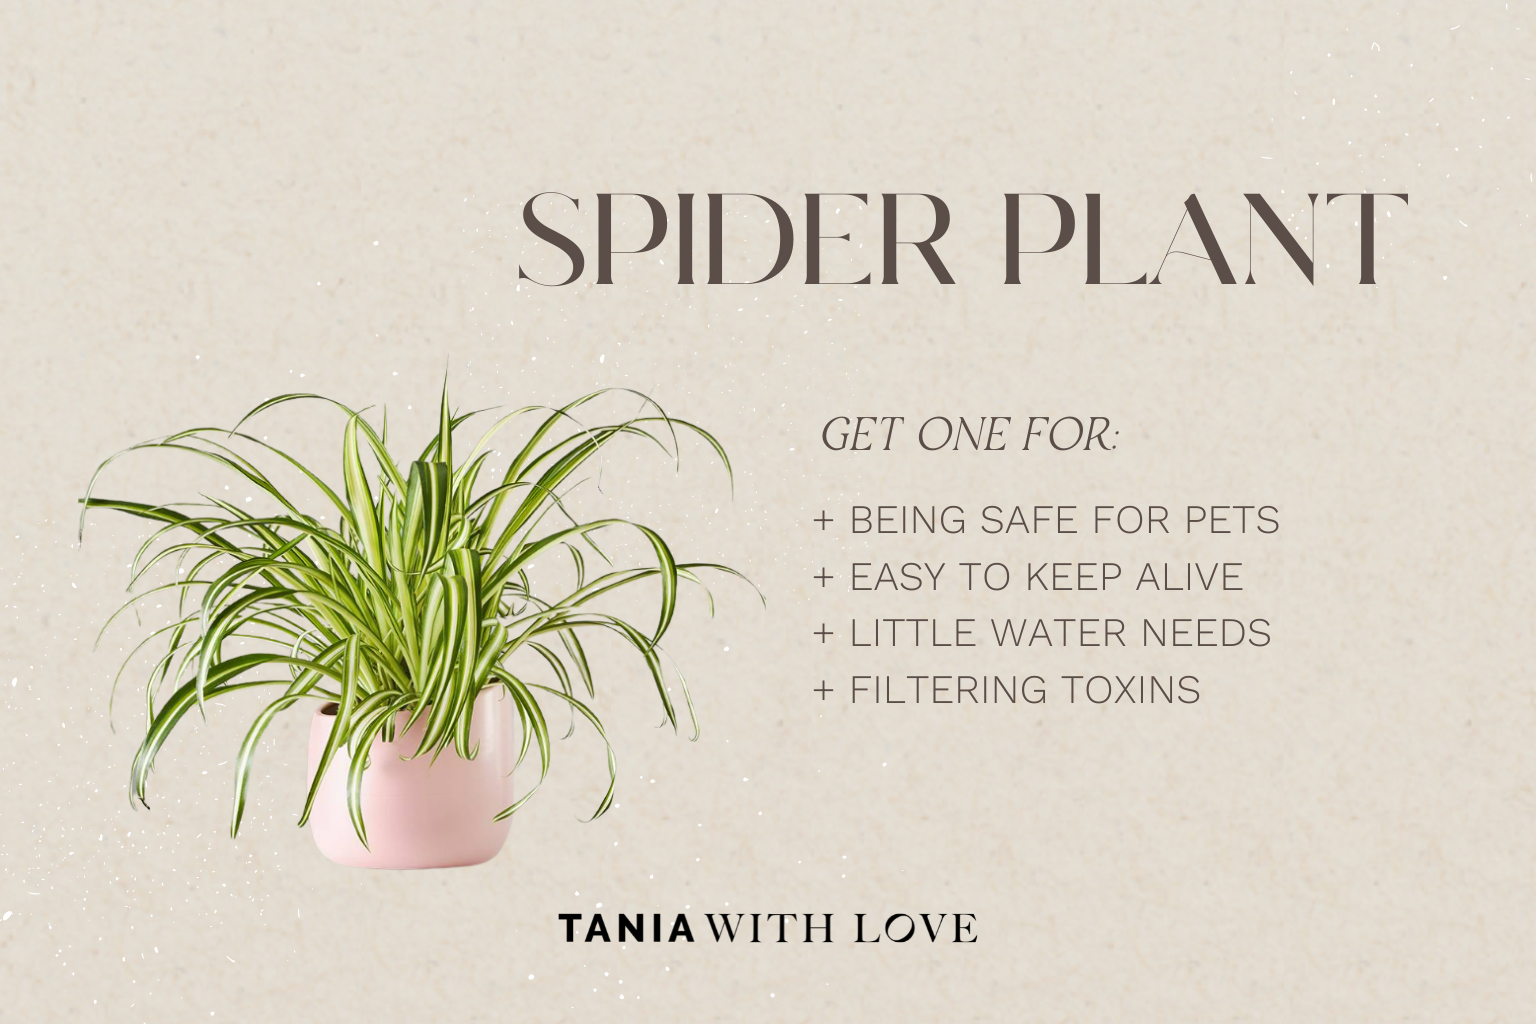 spider plant low maintenance plants that purify air